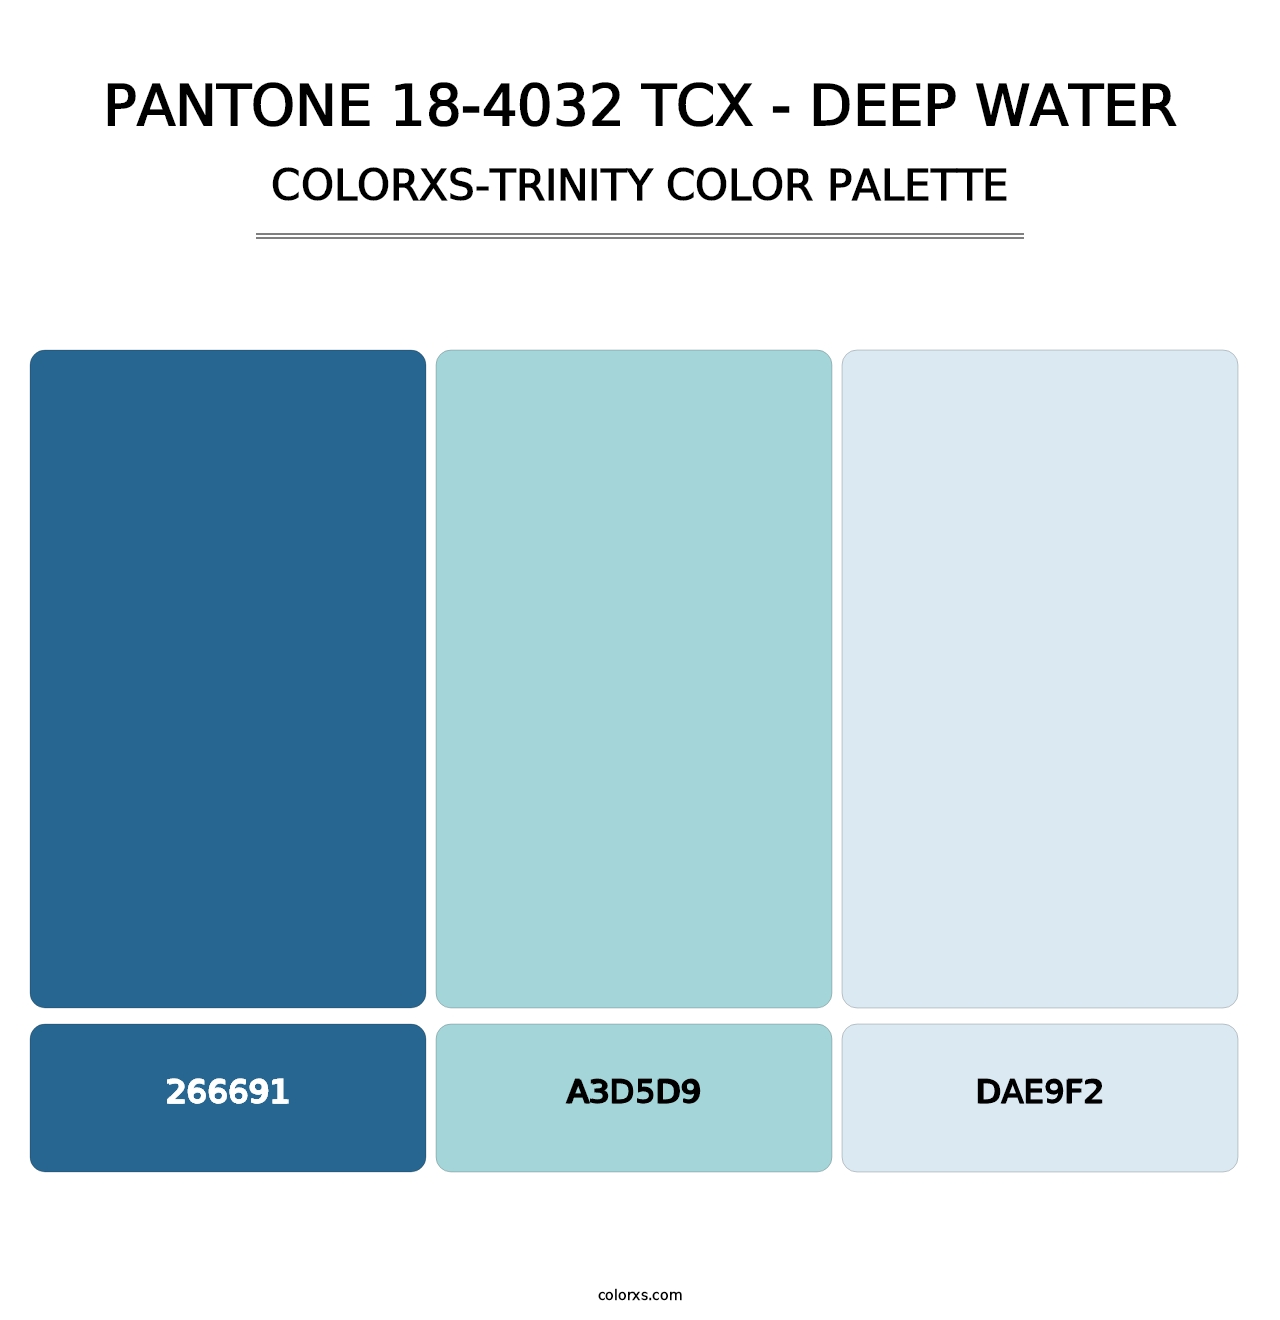 PANTONE 18-4032 TCX - Deep Water - Colorxs Trinity Palette